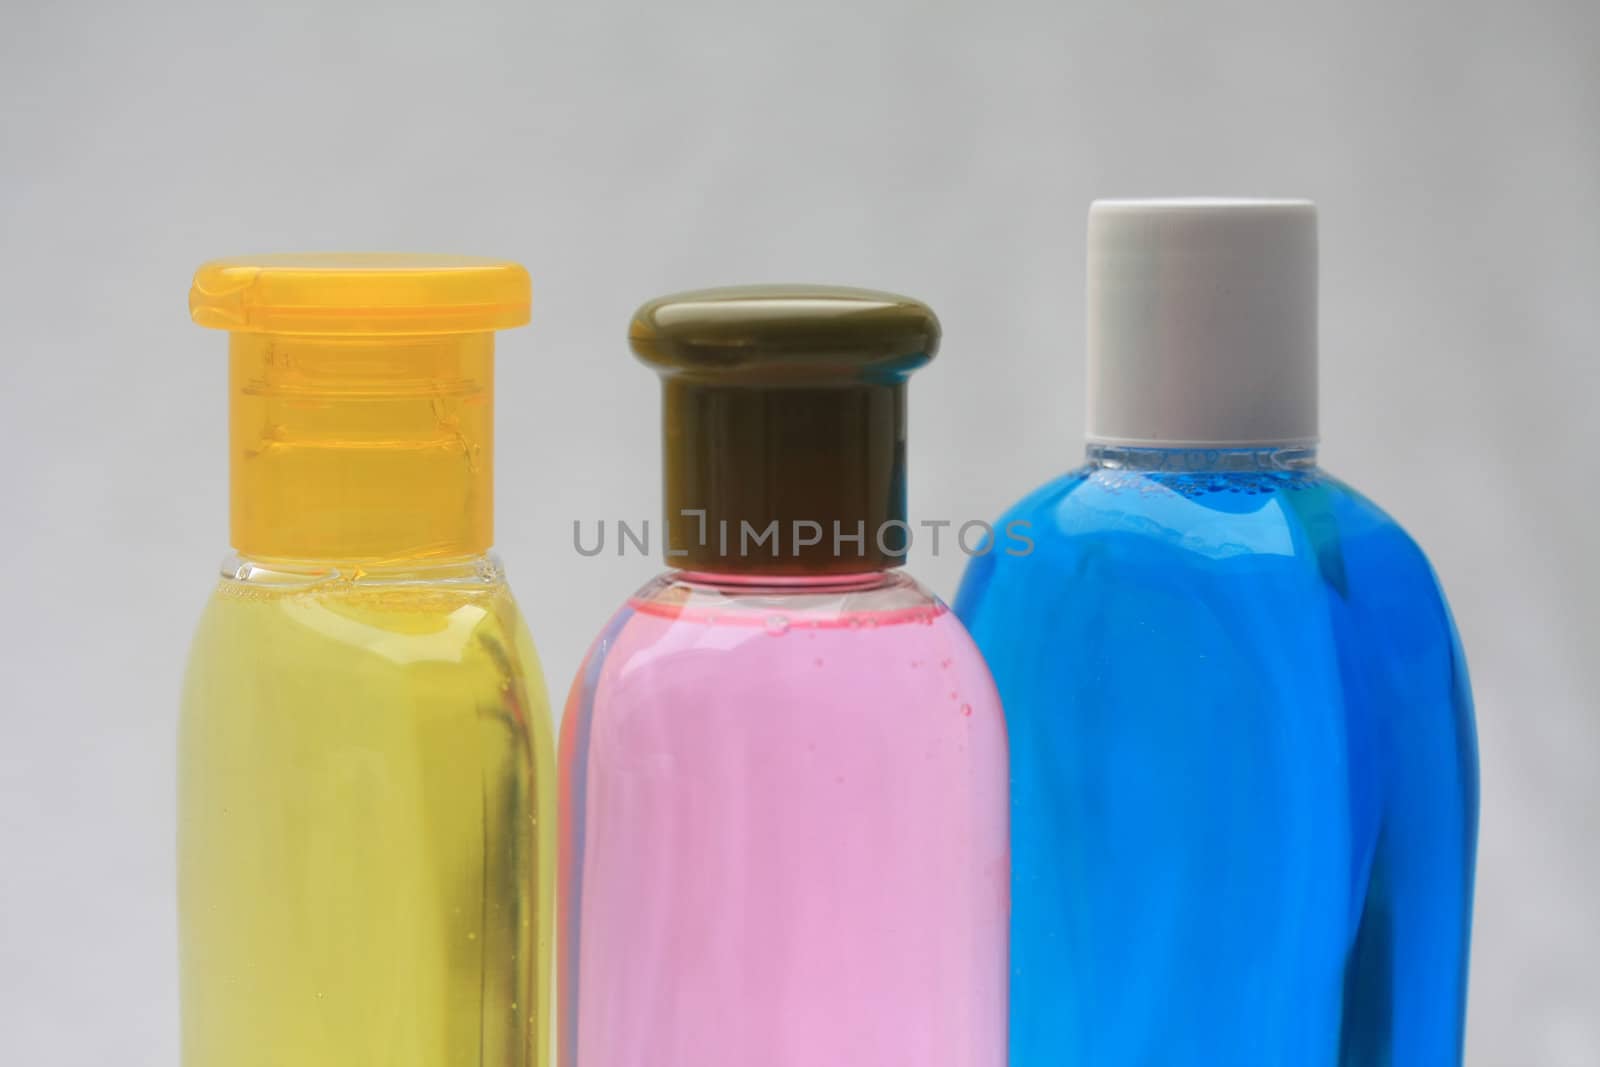 Shampoo bottles by studioportosabbia